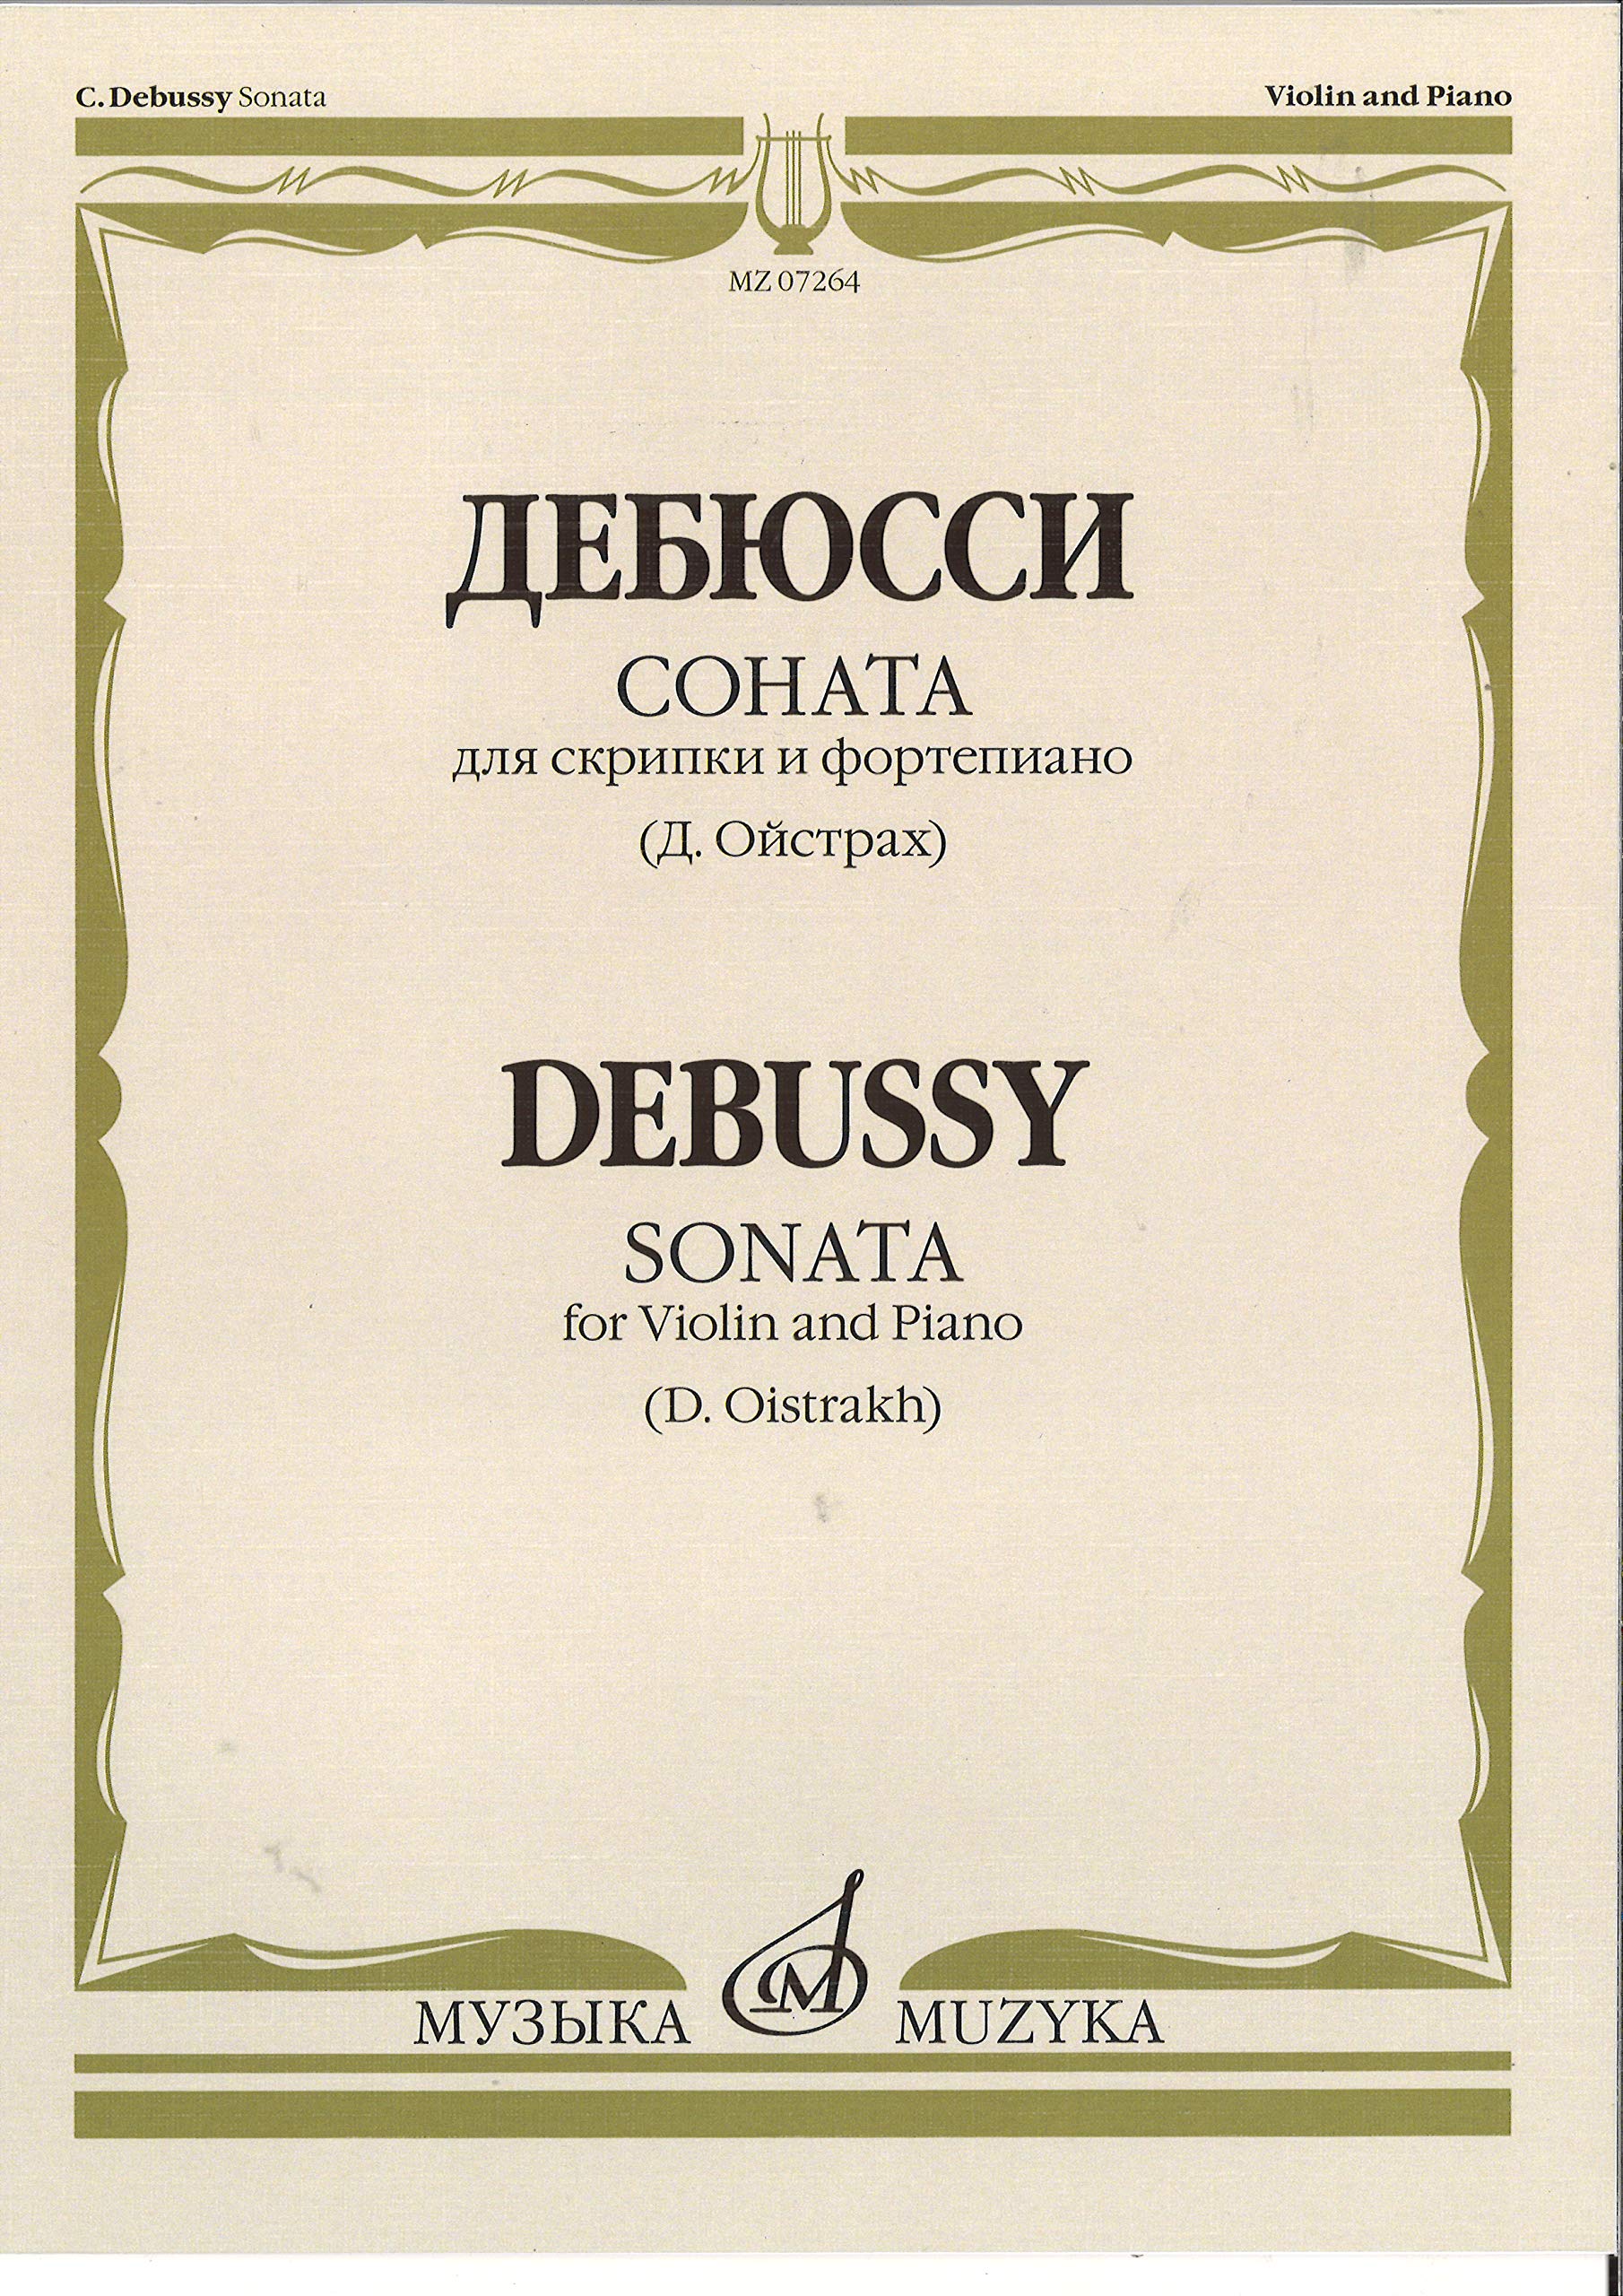 Debussy: Violin Sonata in G Minor, L 140